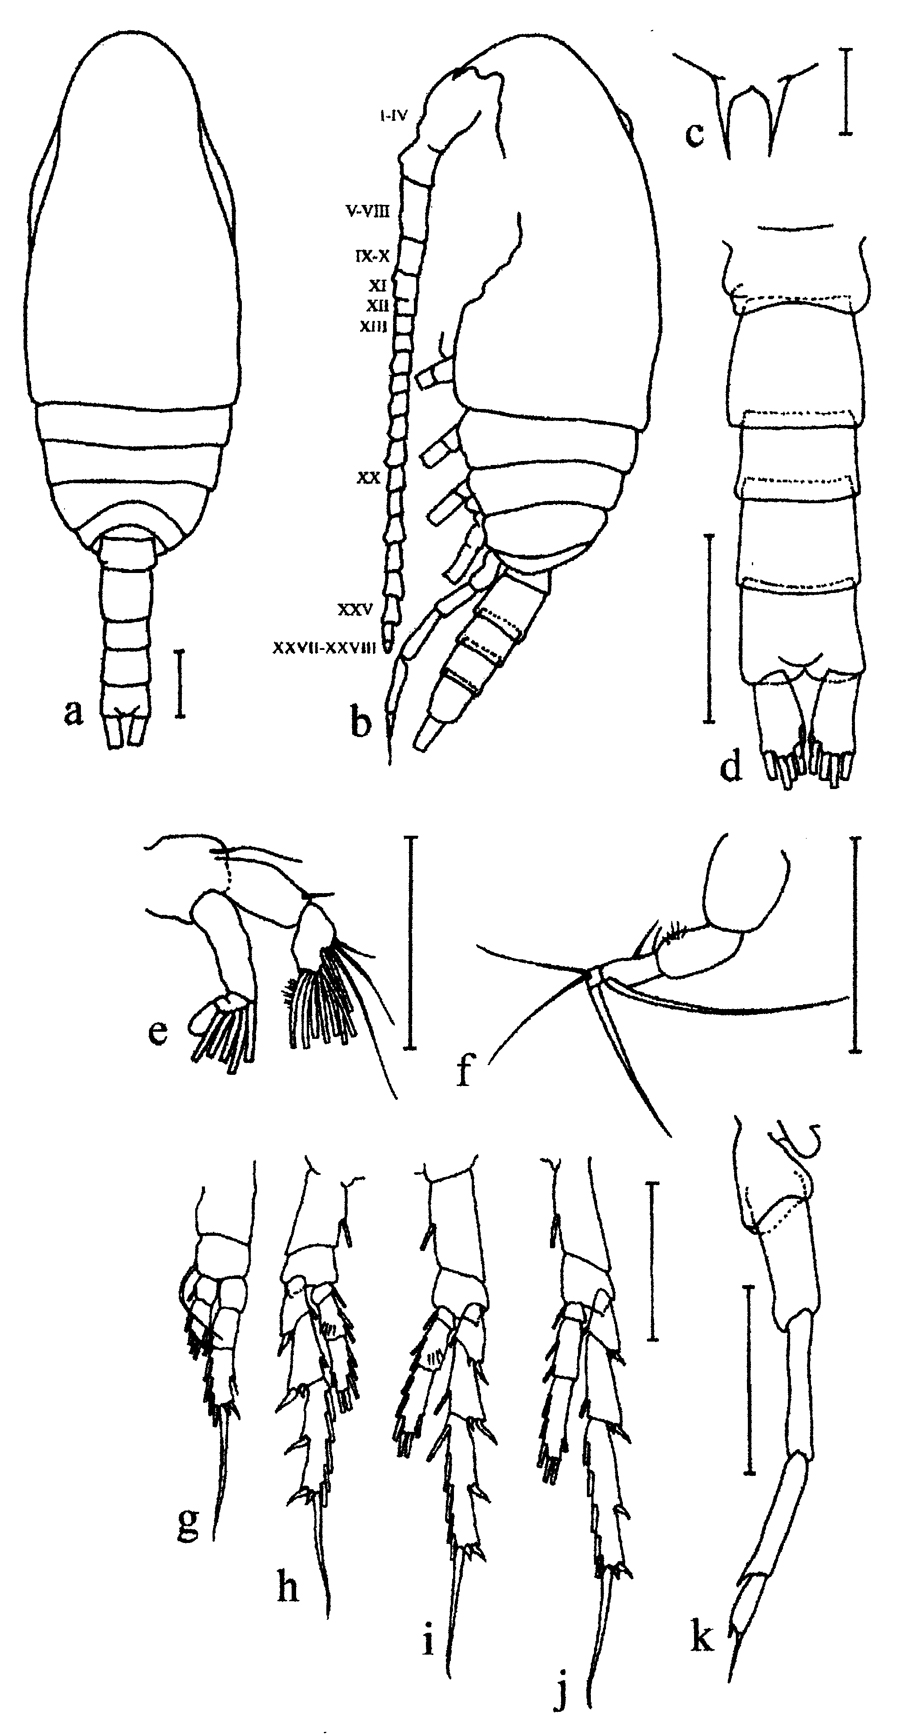 Species Bestiolina arabica - Plate 5 of morphological figures